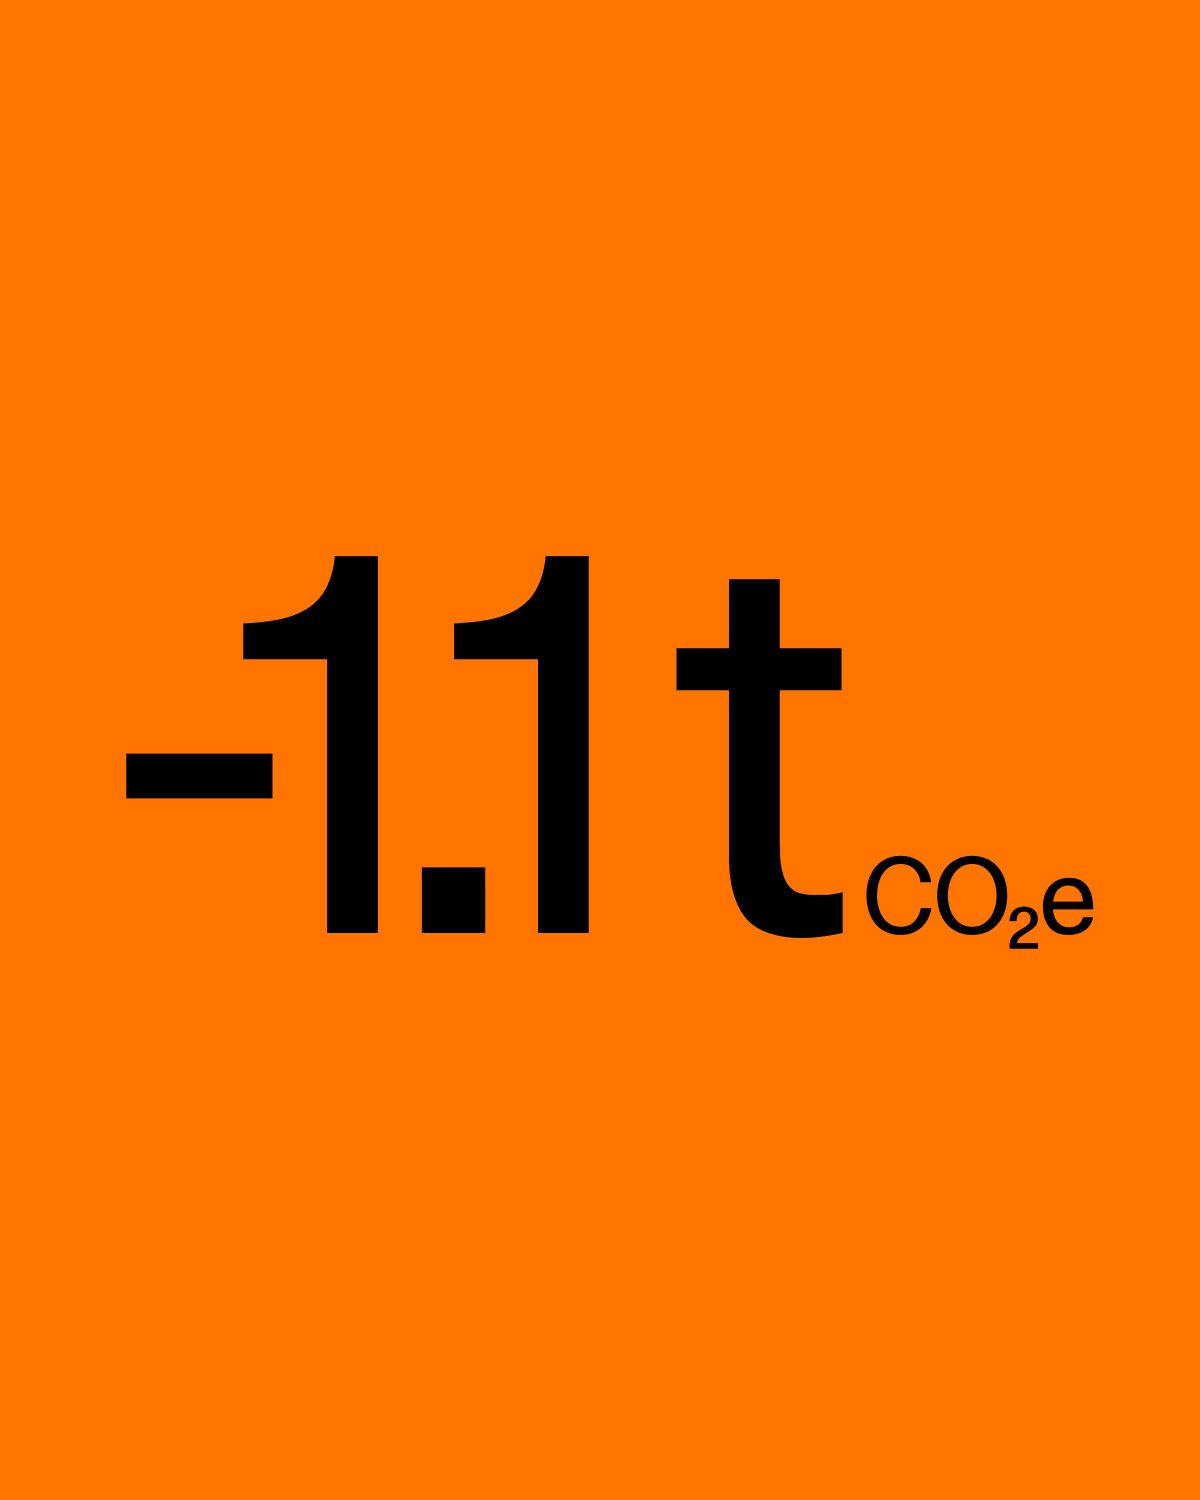 Orange background, black text -1.1 tco2e